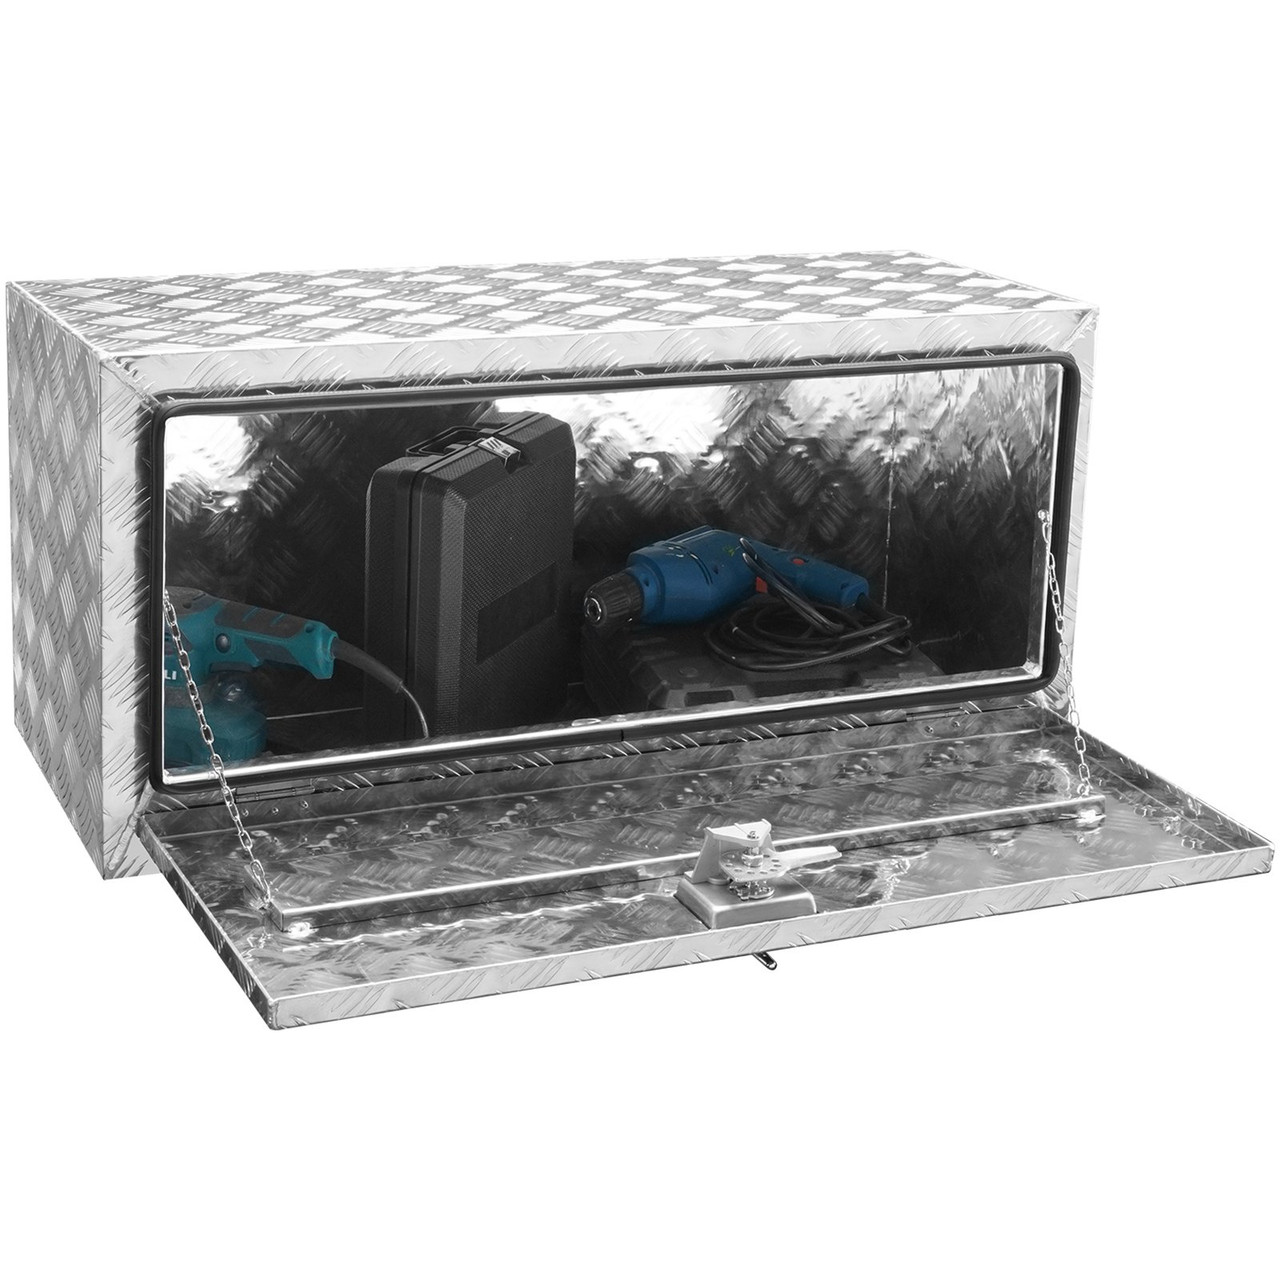 Underbody Truck Box, 36"×14"×16" Pickup Storage Box, Heavy Duty Aluminum Diamond Plate Tool Box with Lock and Keys, Waterproof Trailer Storage Box with T-Handle Latch for Truck, Van, Trailer